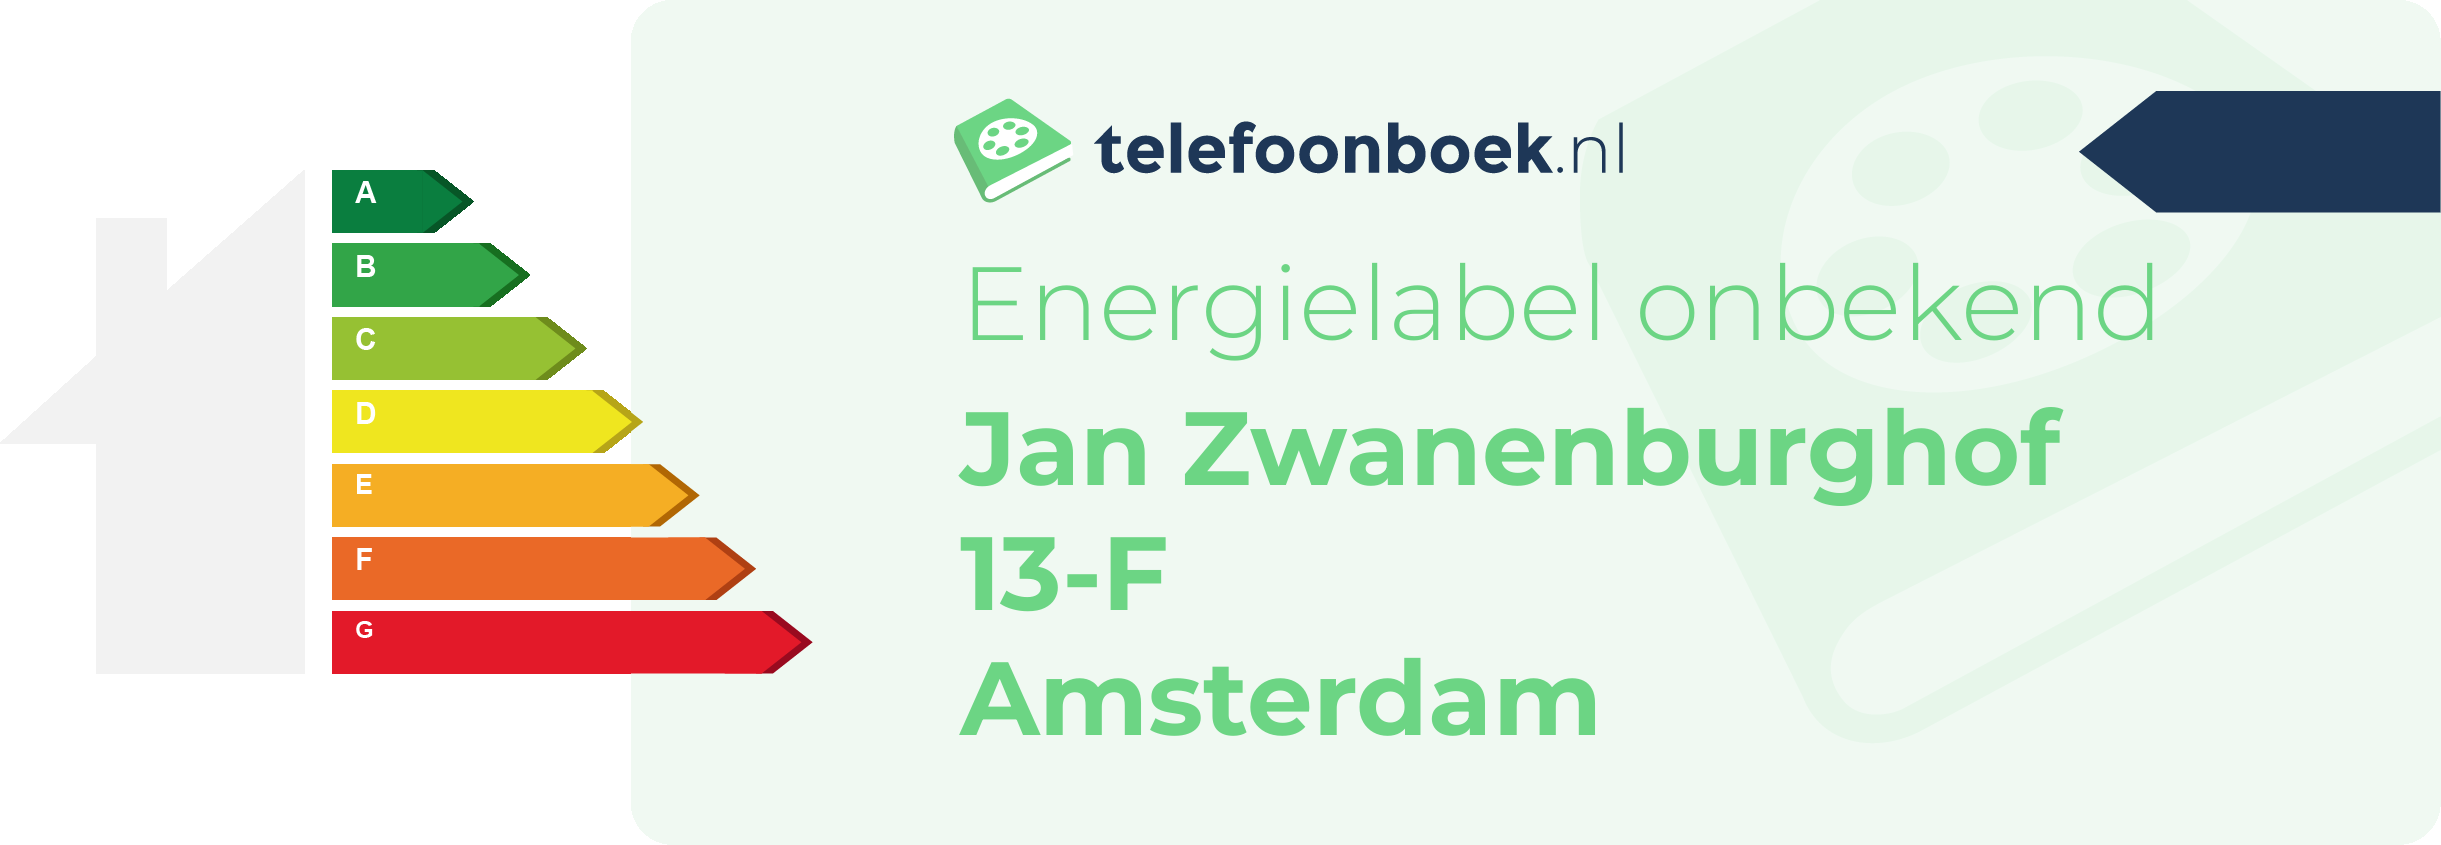 Energielabel Jan Zwanenburghof 13-F Amsterdam